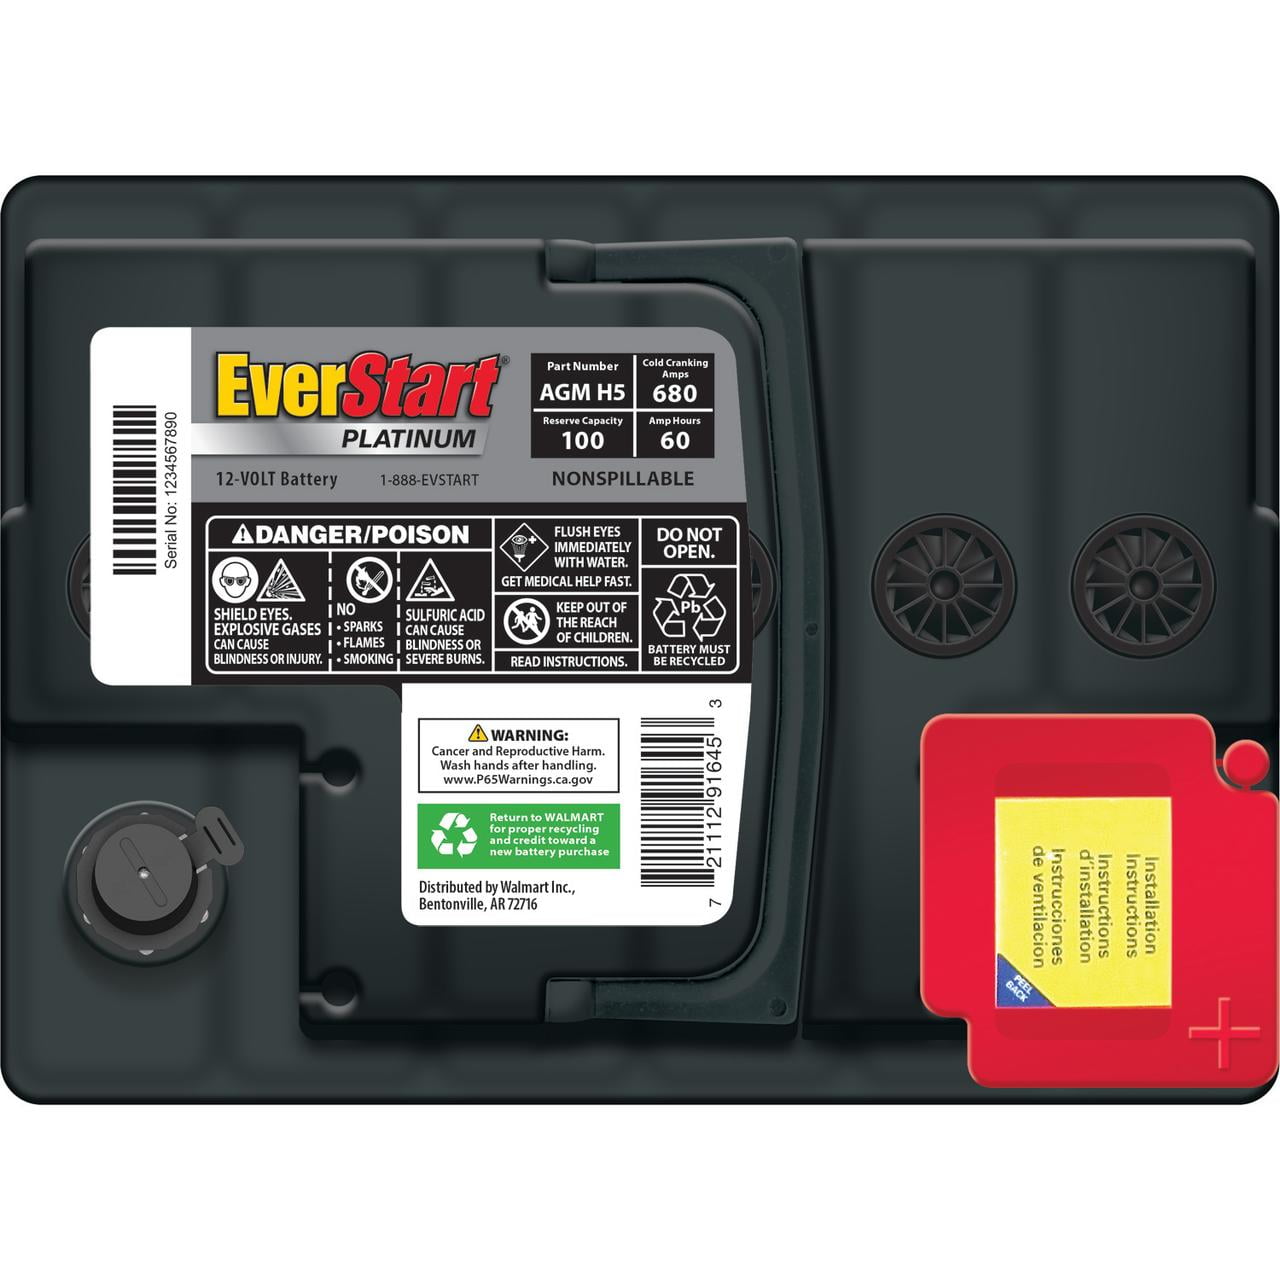 EverStart Platinum AGM Automotive Battery, Group Size H5 / LN2 / 47 12 Volt, 680 CCA